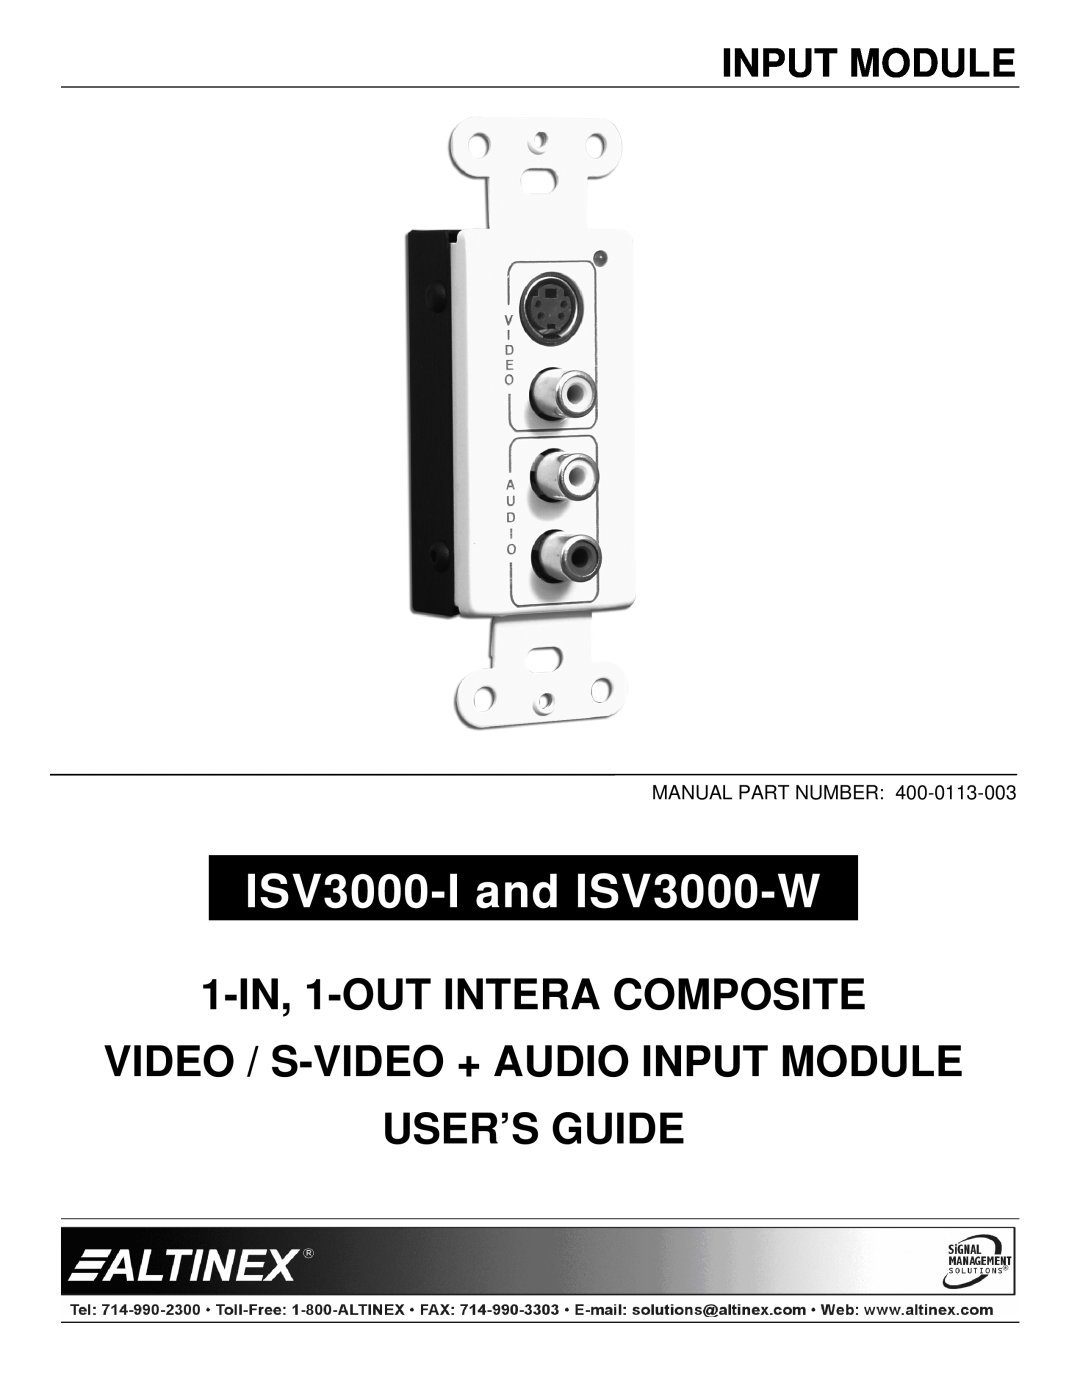 Altinex manual Input Module, ISV3000-Iand ISV3000-W, 1-IN, 1-OUTINTERA COMPOSITE 